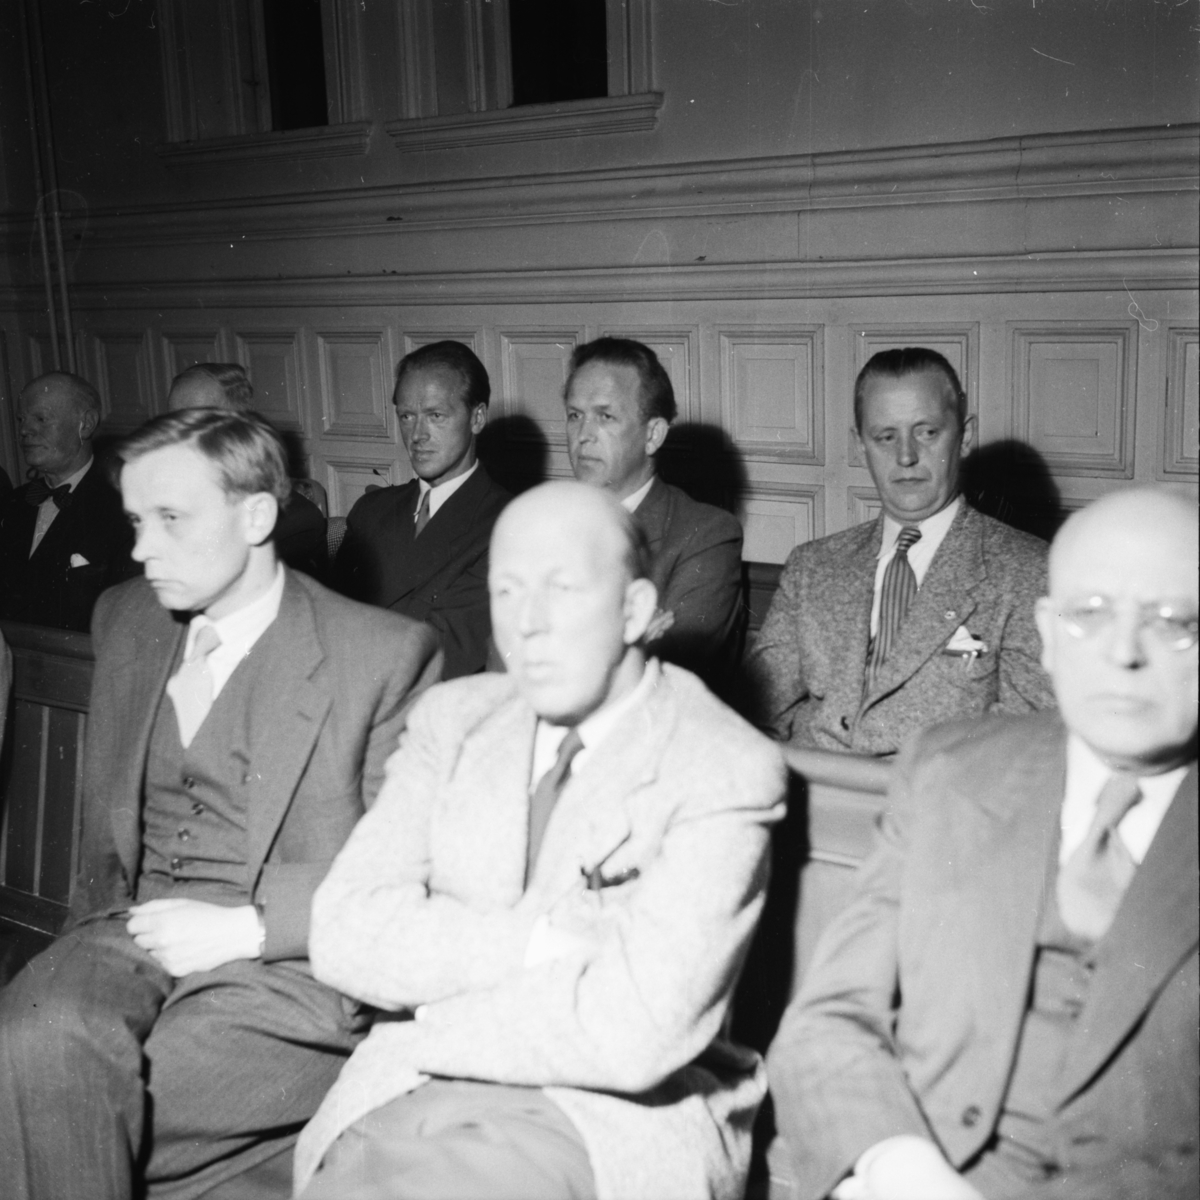 Vardens arkiv. "Byjubilekomiteen i Skien (1951)
Jurysalen i Rådhuset"  06.05.1954